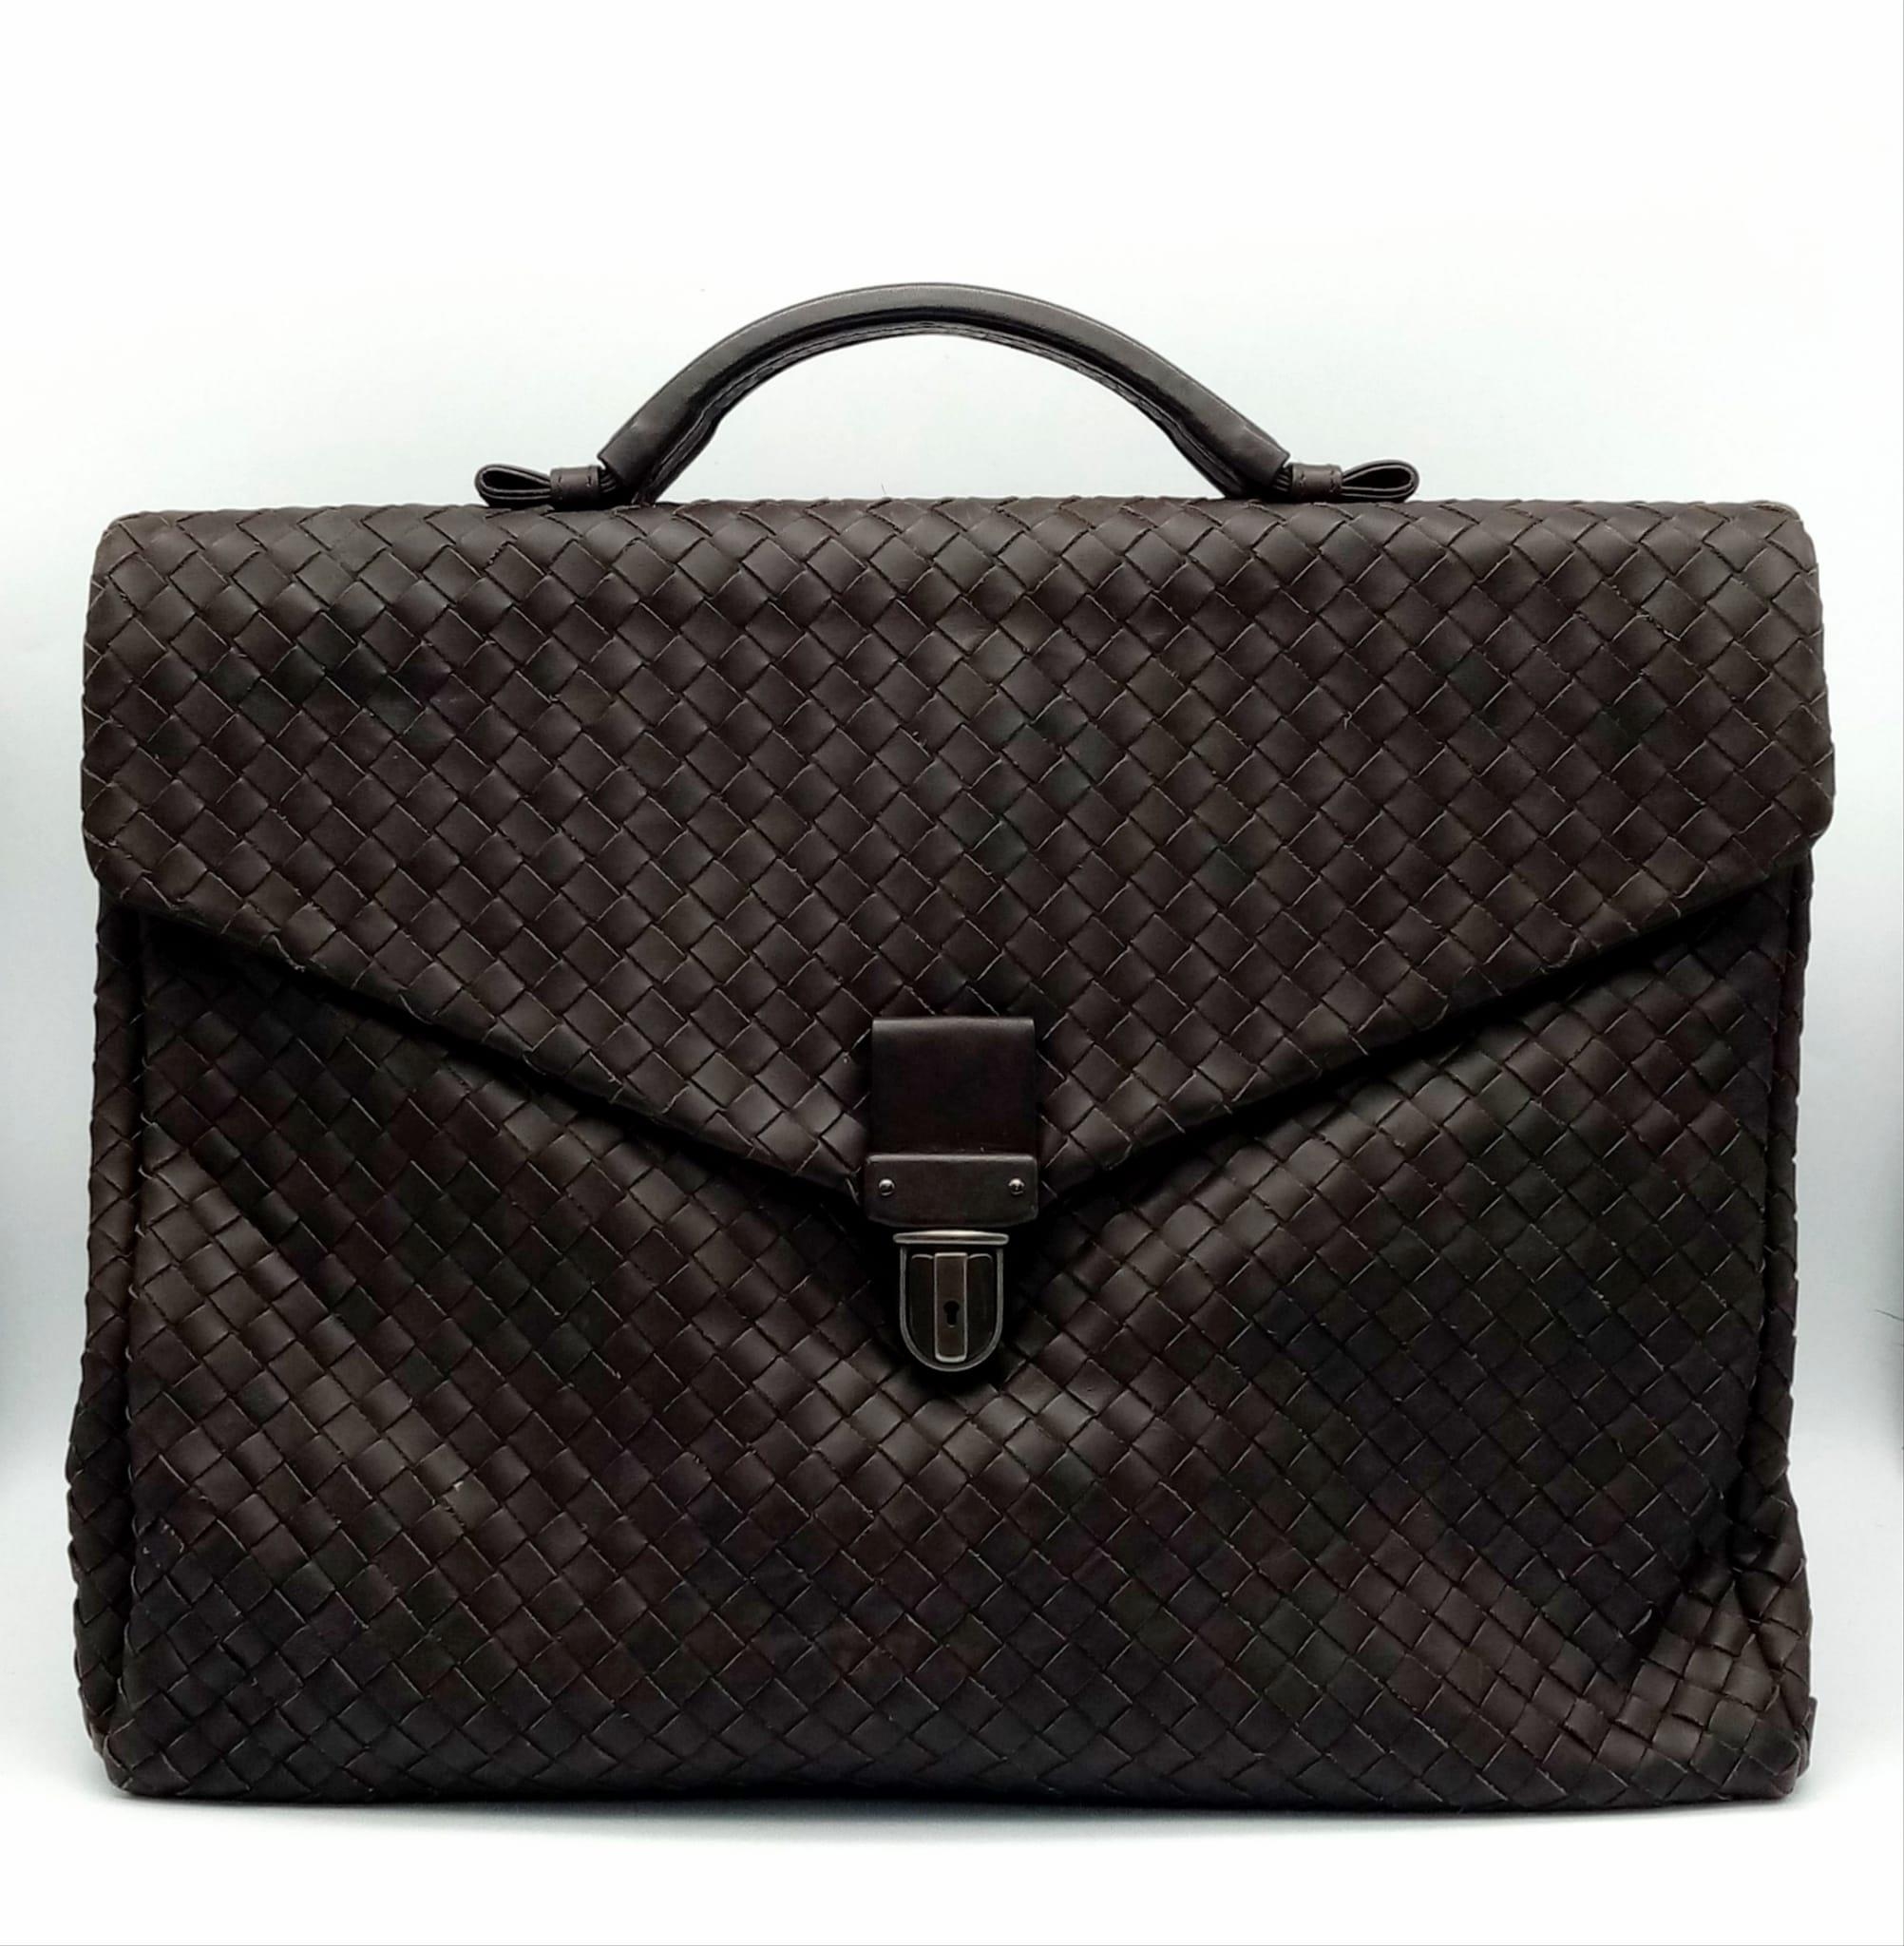 A Bottega Veneta Black Leather Briefcase. Leather intrecciato weave exterior with a large zipped